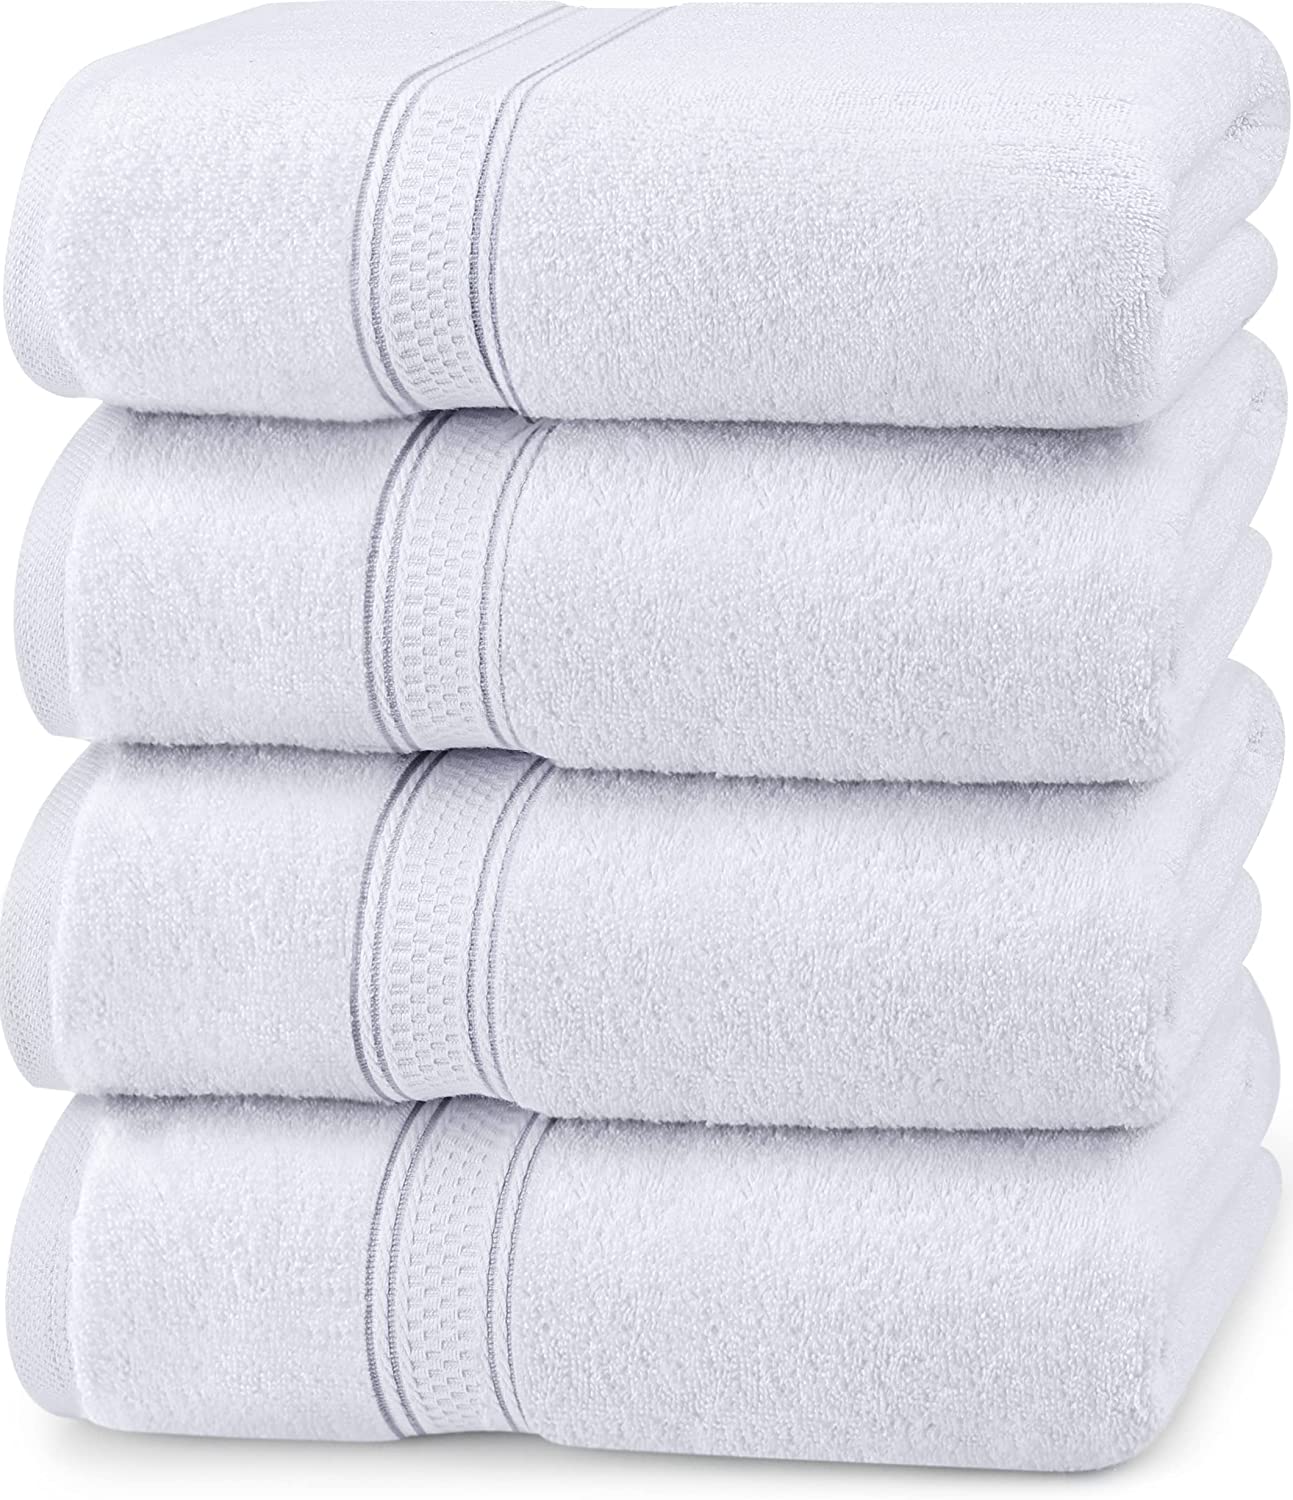 Utopia Towels Premium Bath Towels Pack of 4, 27 x 54 100% Ring-Spun Cotton Towel